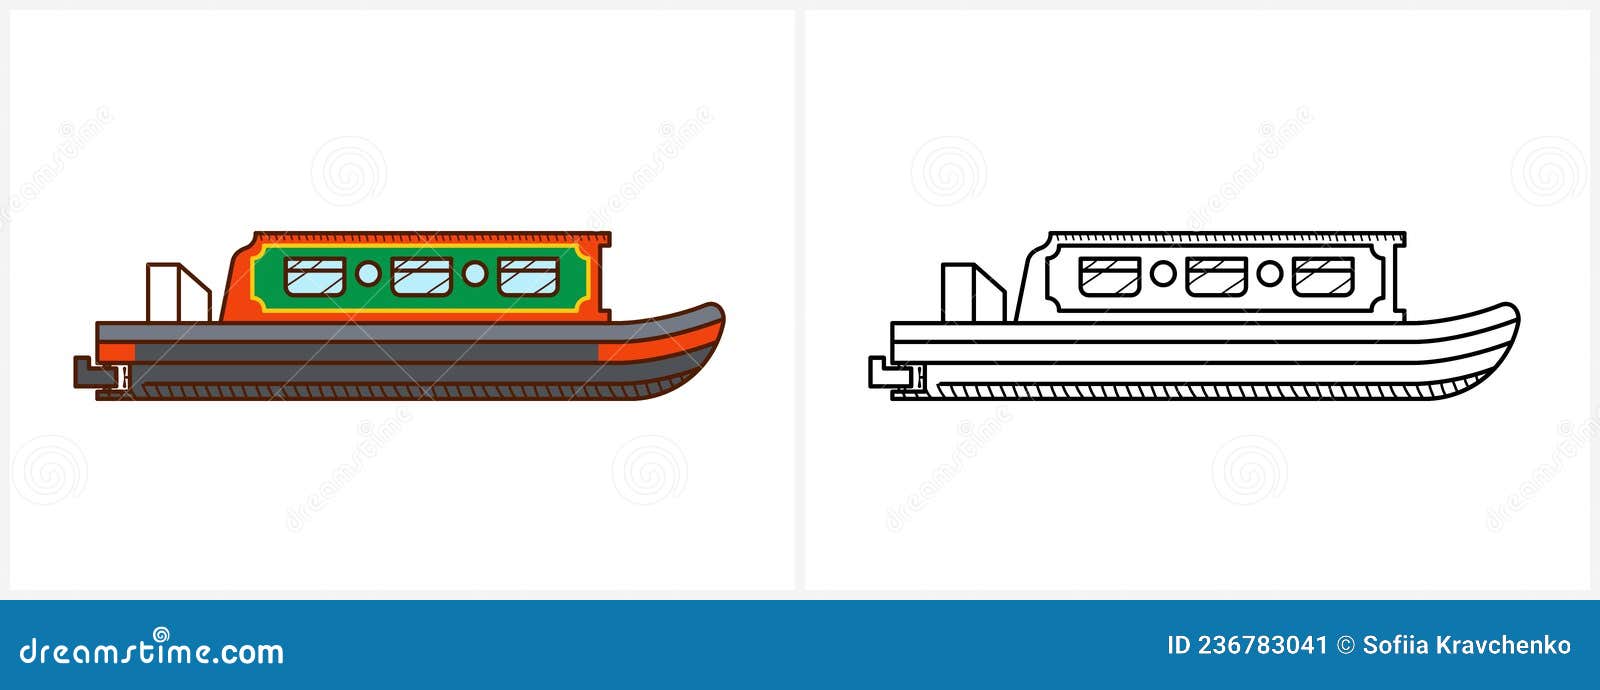 narrow-boat-coloring-page-for-kids-narrow-boat-cartoon-vector